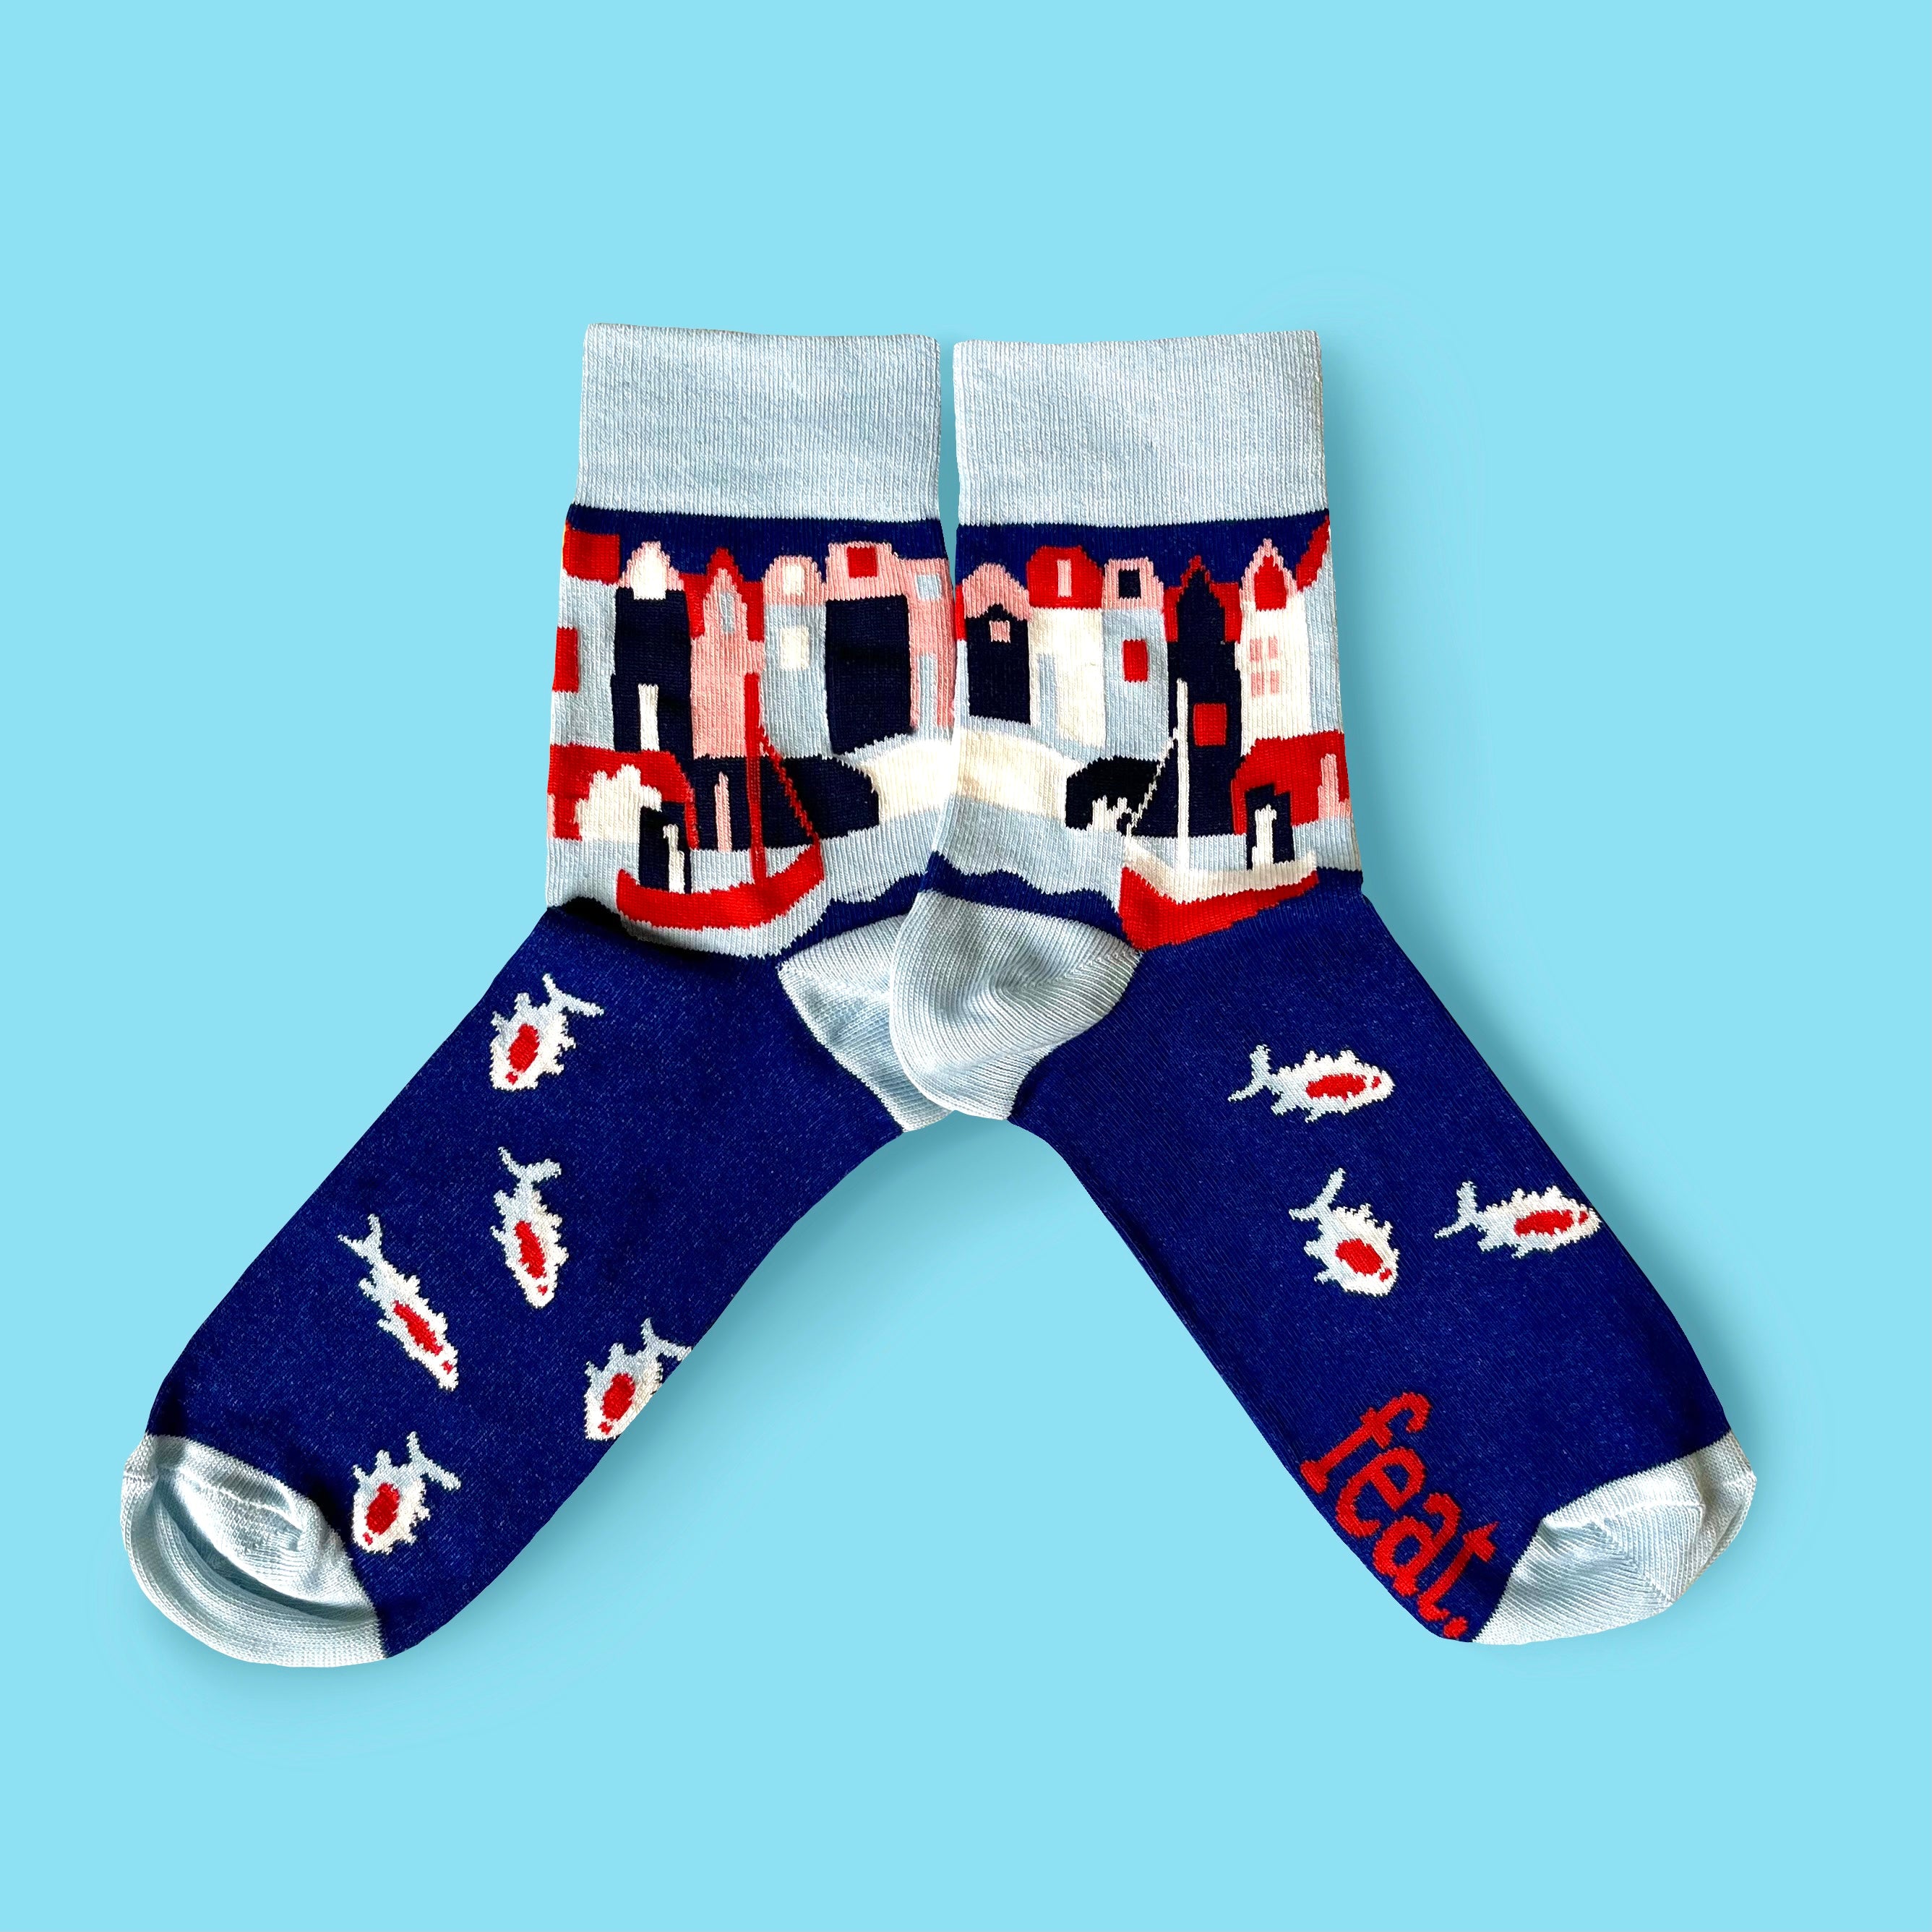 Men’s Port Village summer-length socks